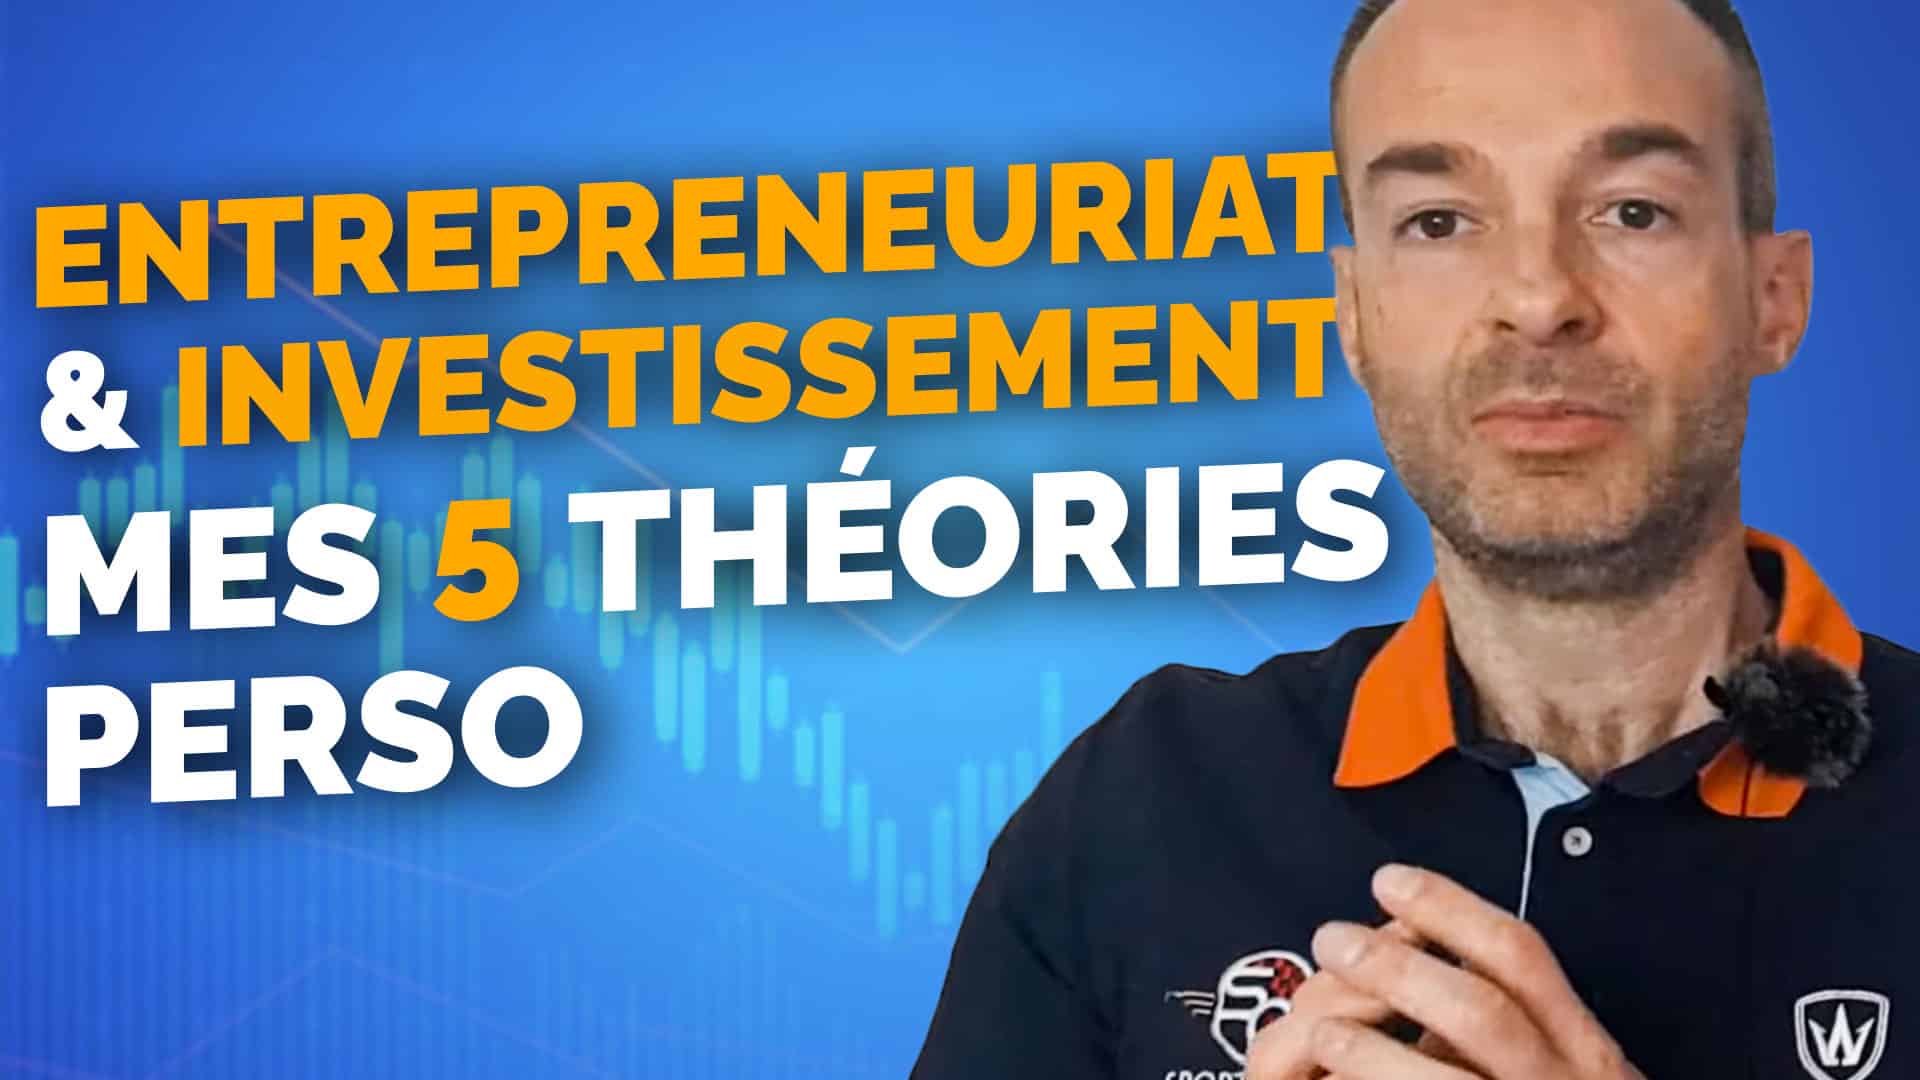 théories entrepreneur investisseur